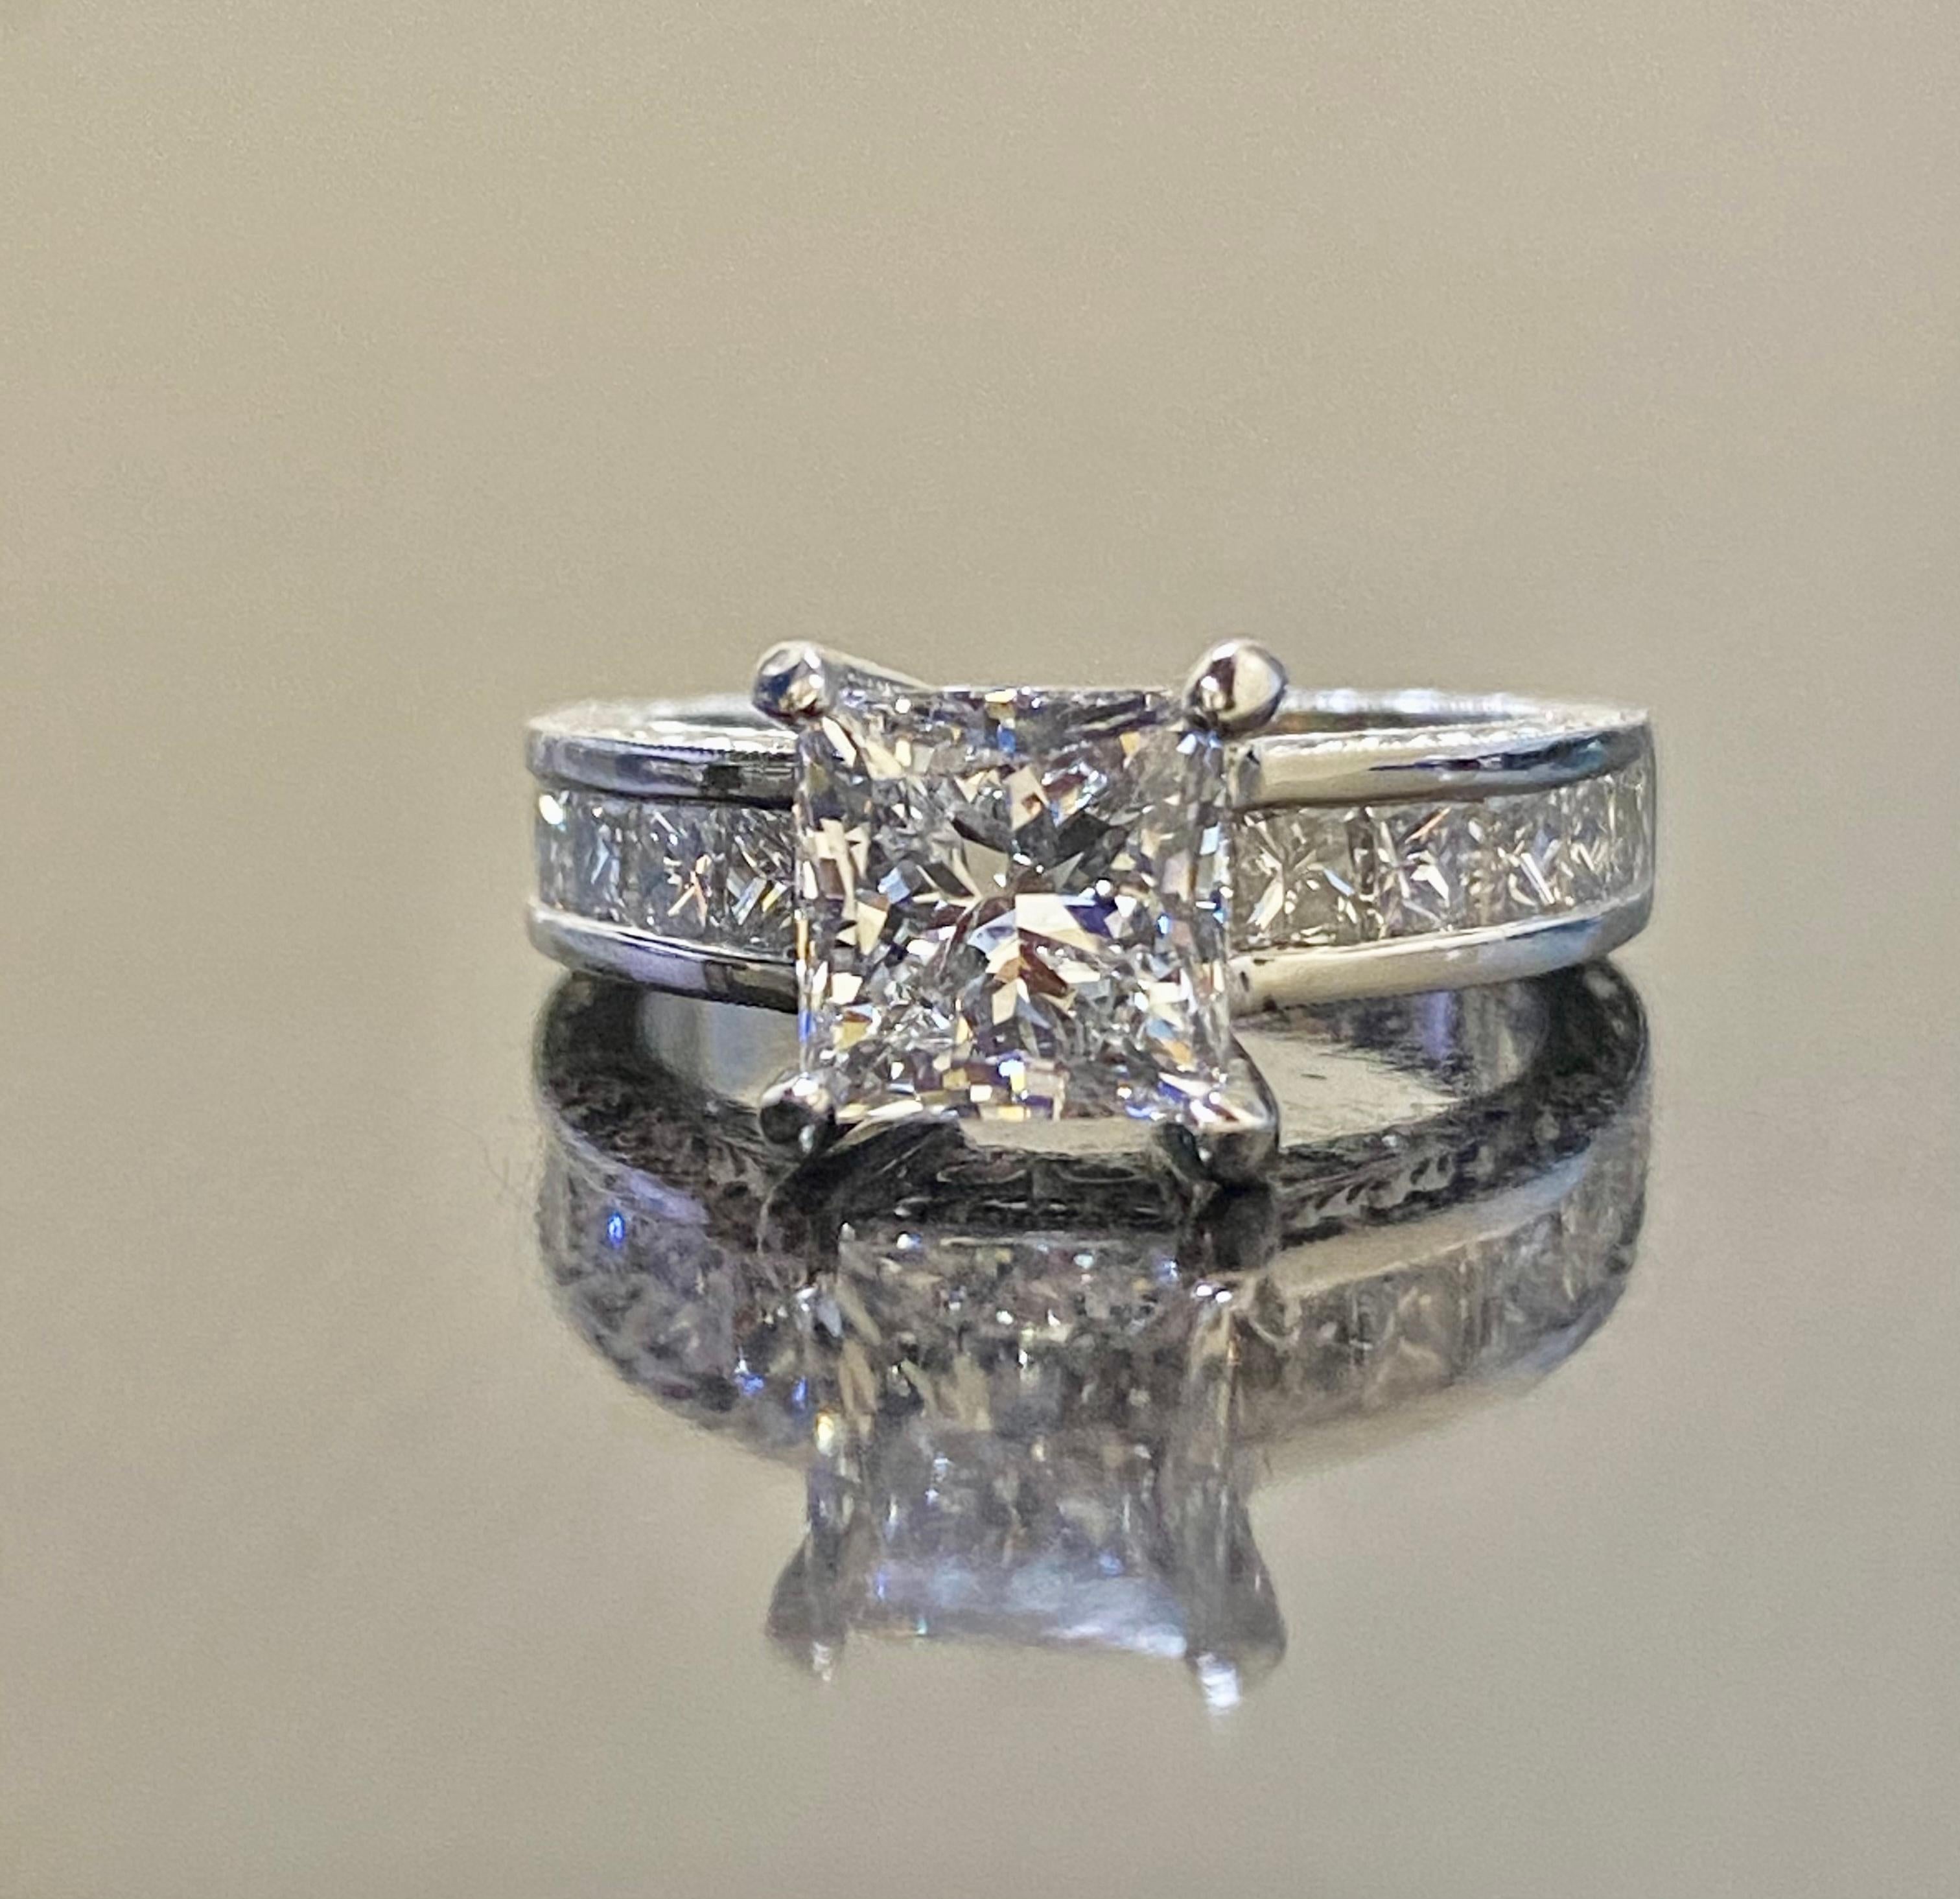 2 carat princess cut diamond ring on finger